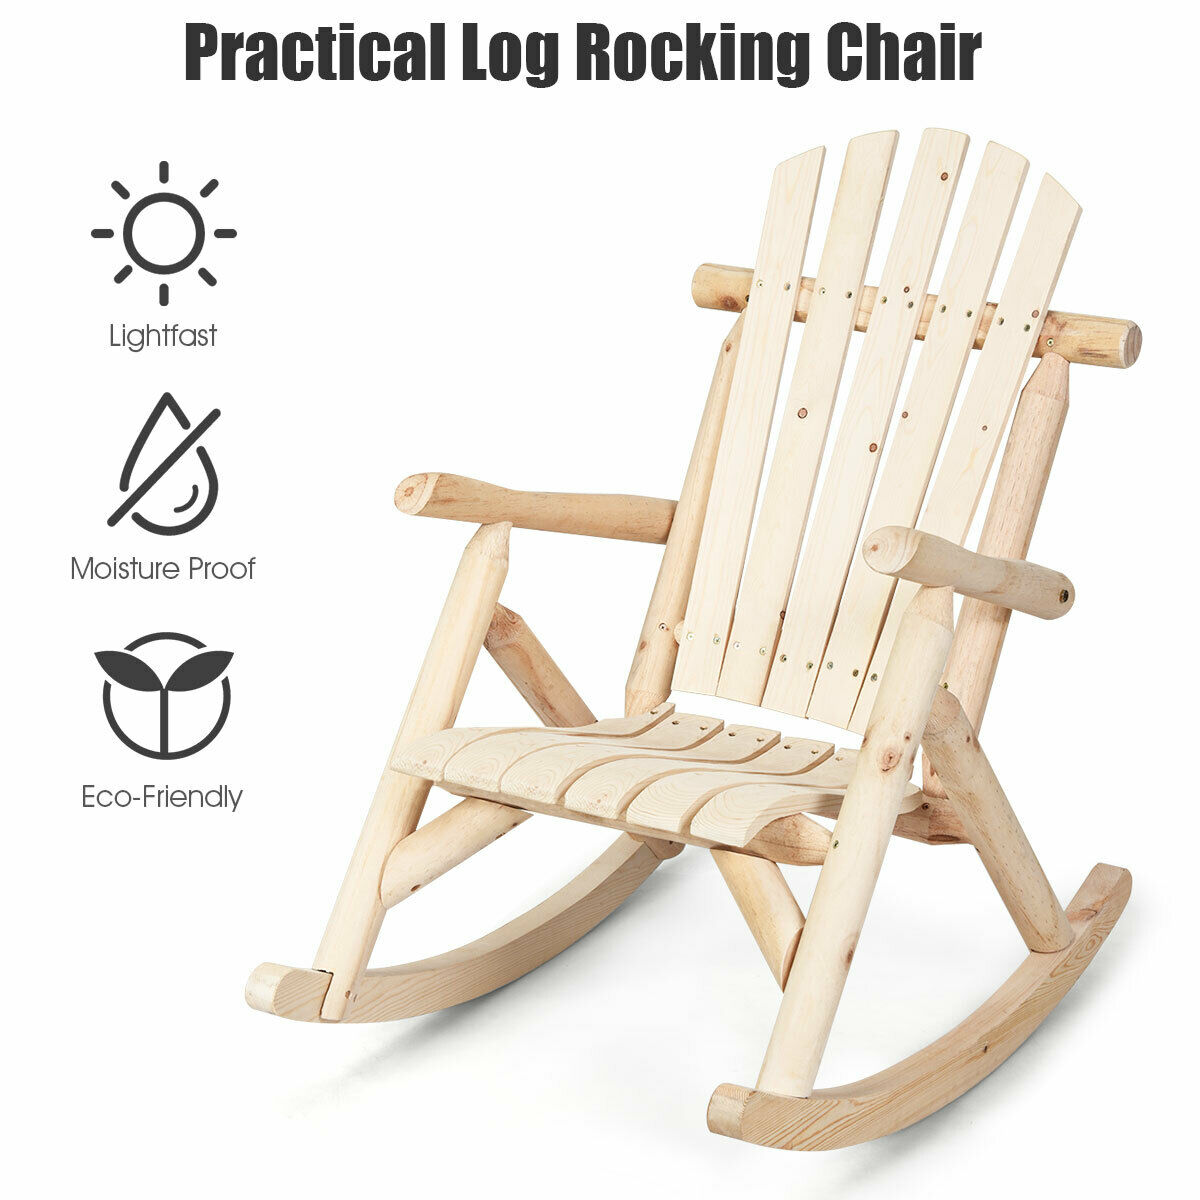 Costway Log Rocking Chair Wood Single Porch Rocker Lounge Patio Deck Furniture Natural - image 5 of 10